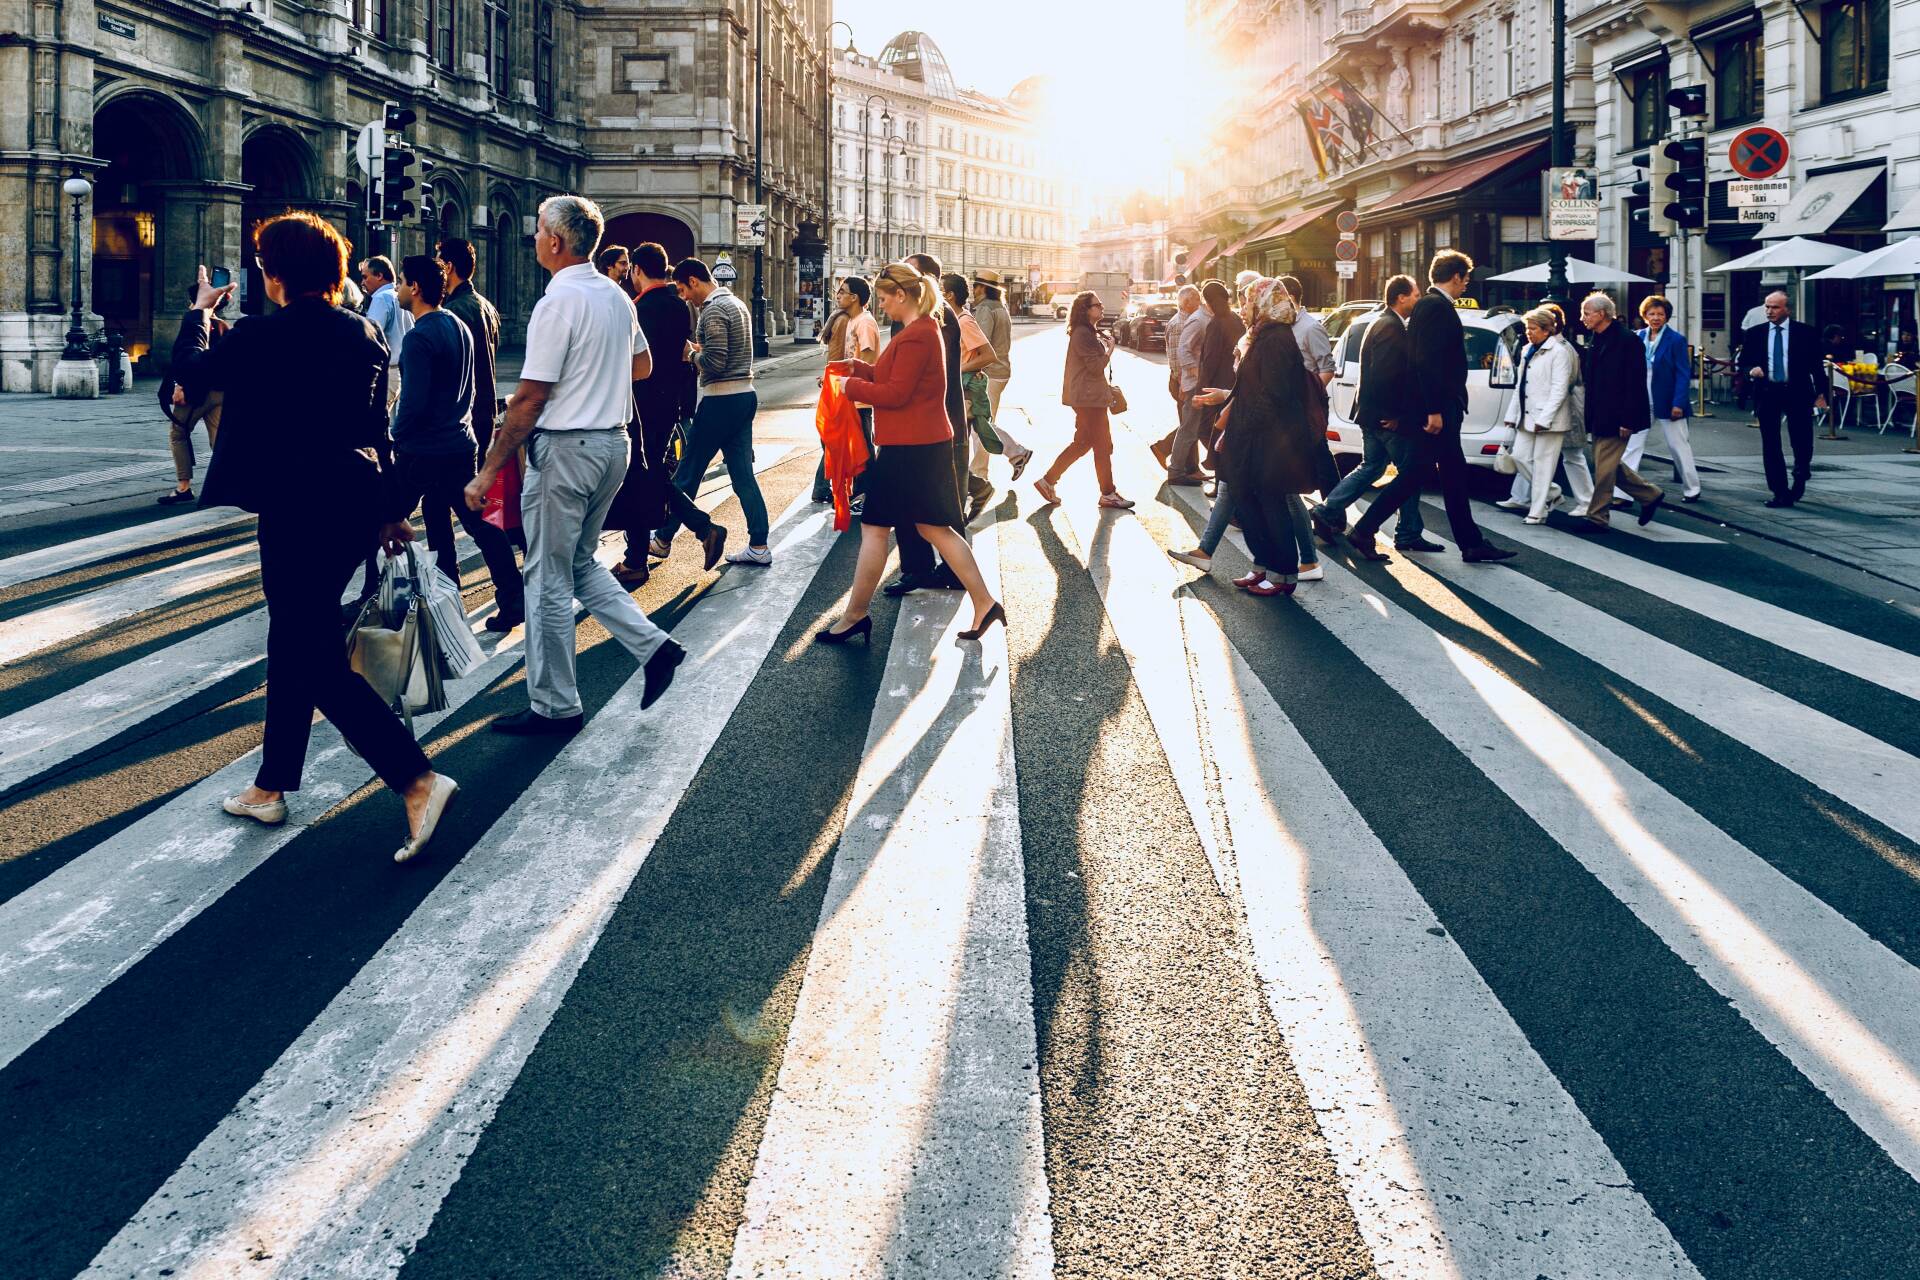 People crossing a busy urban street